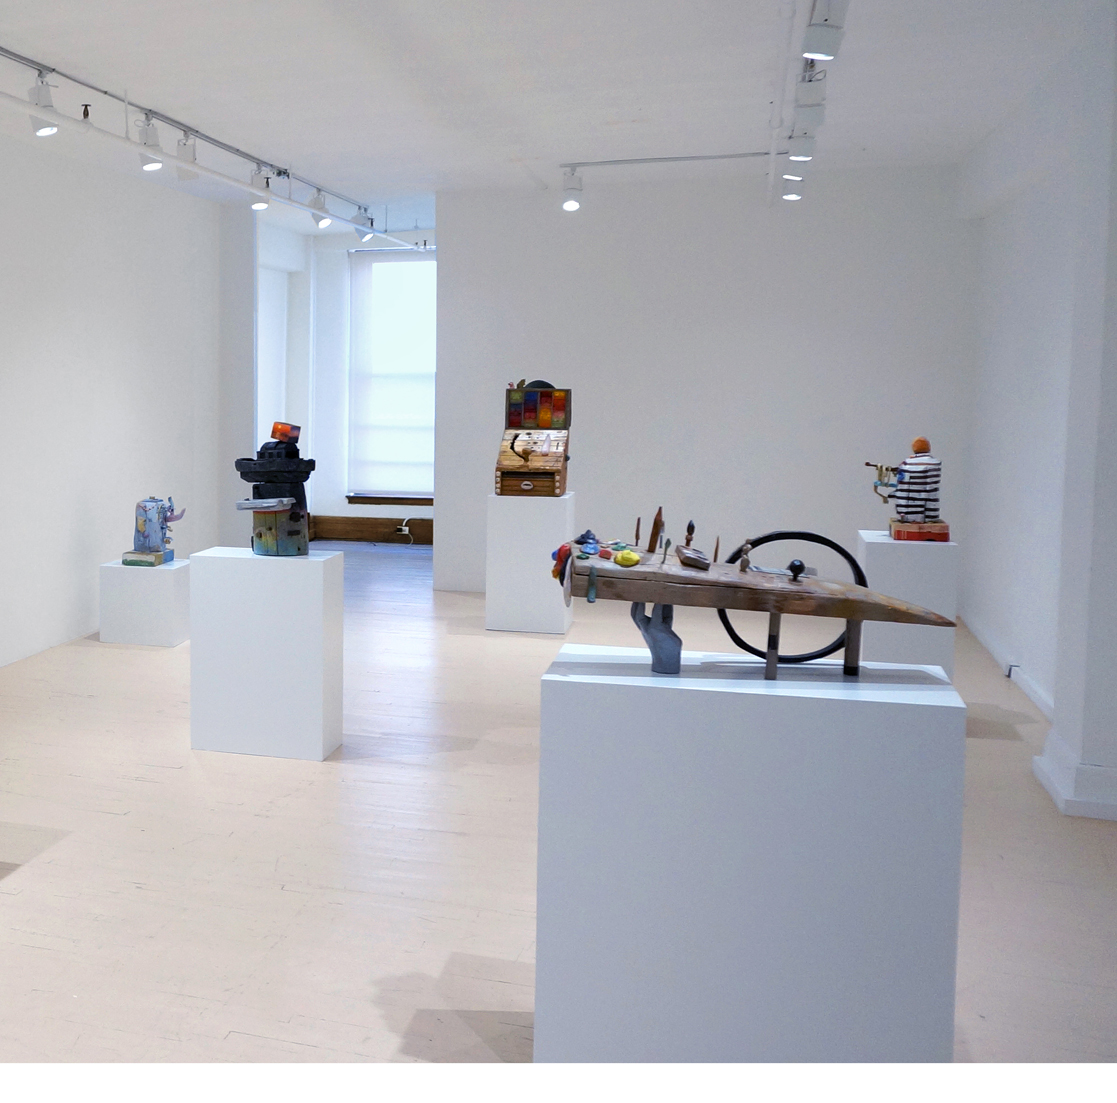  Decoys, installation view, Hugues Charbonneau Gallery, 2016 